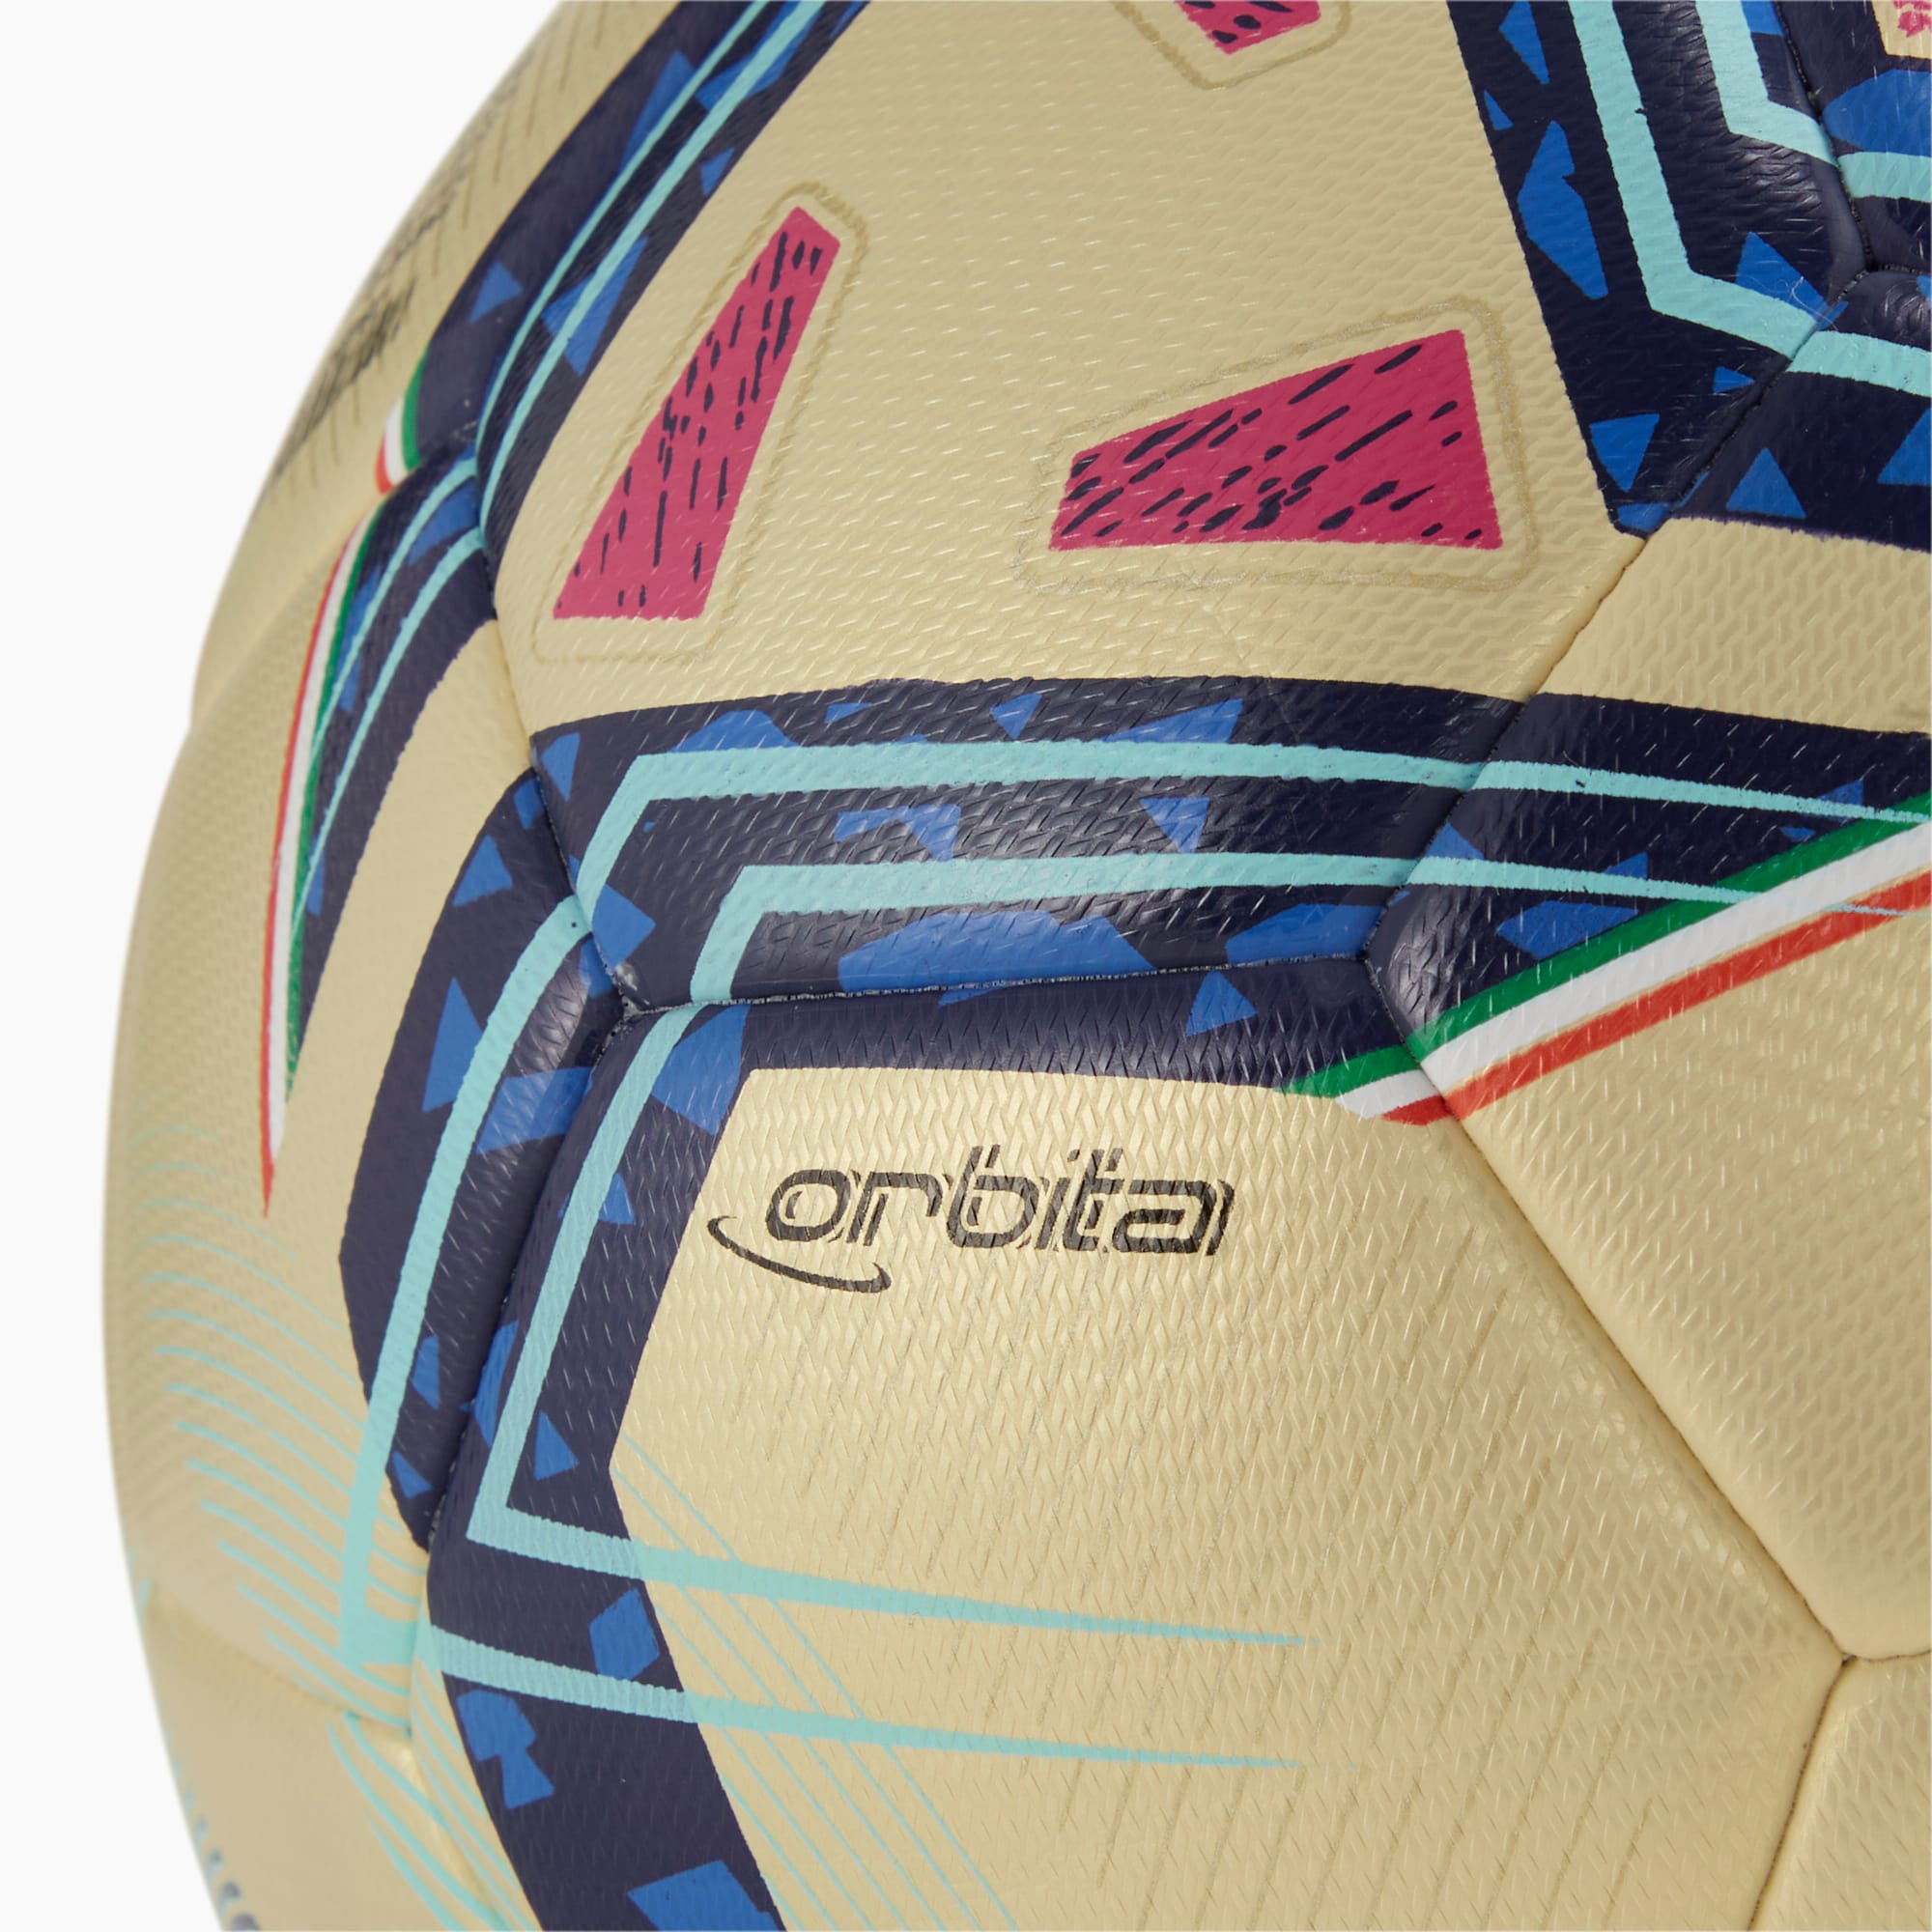 PUMA Serie A Special Edition Hybrid-Trainingsfußball, Gold/Blau, Größe: 5